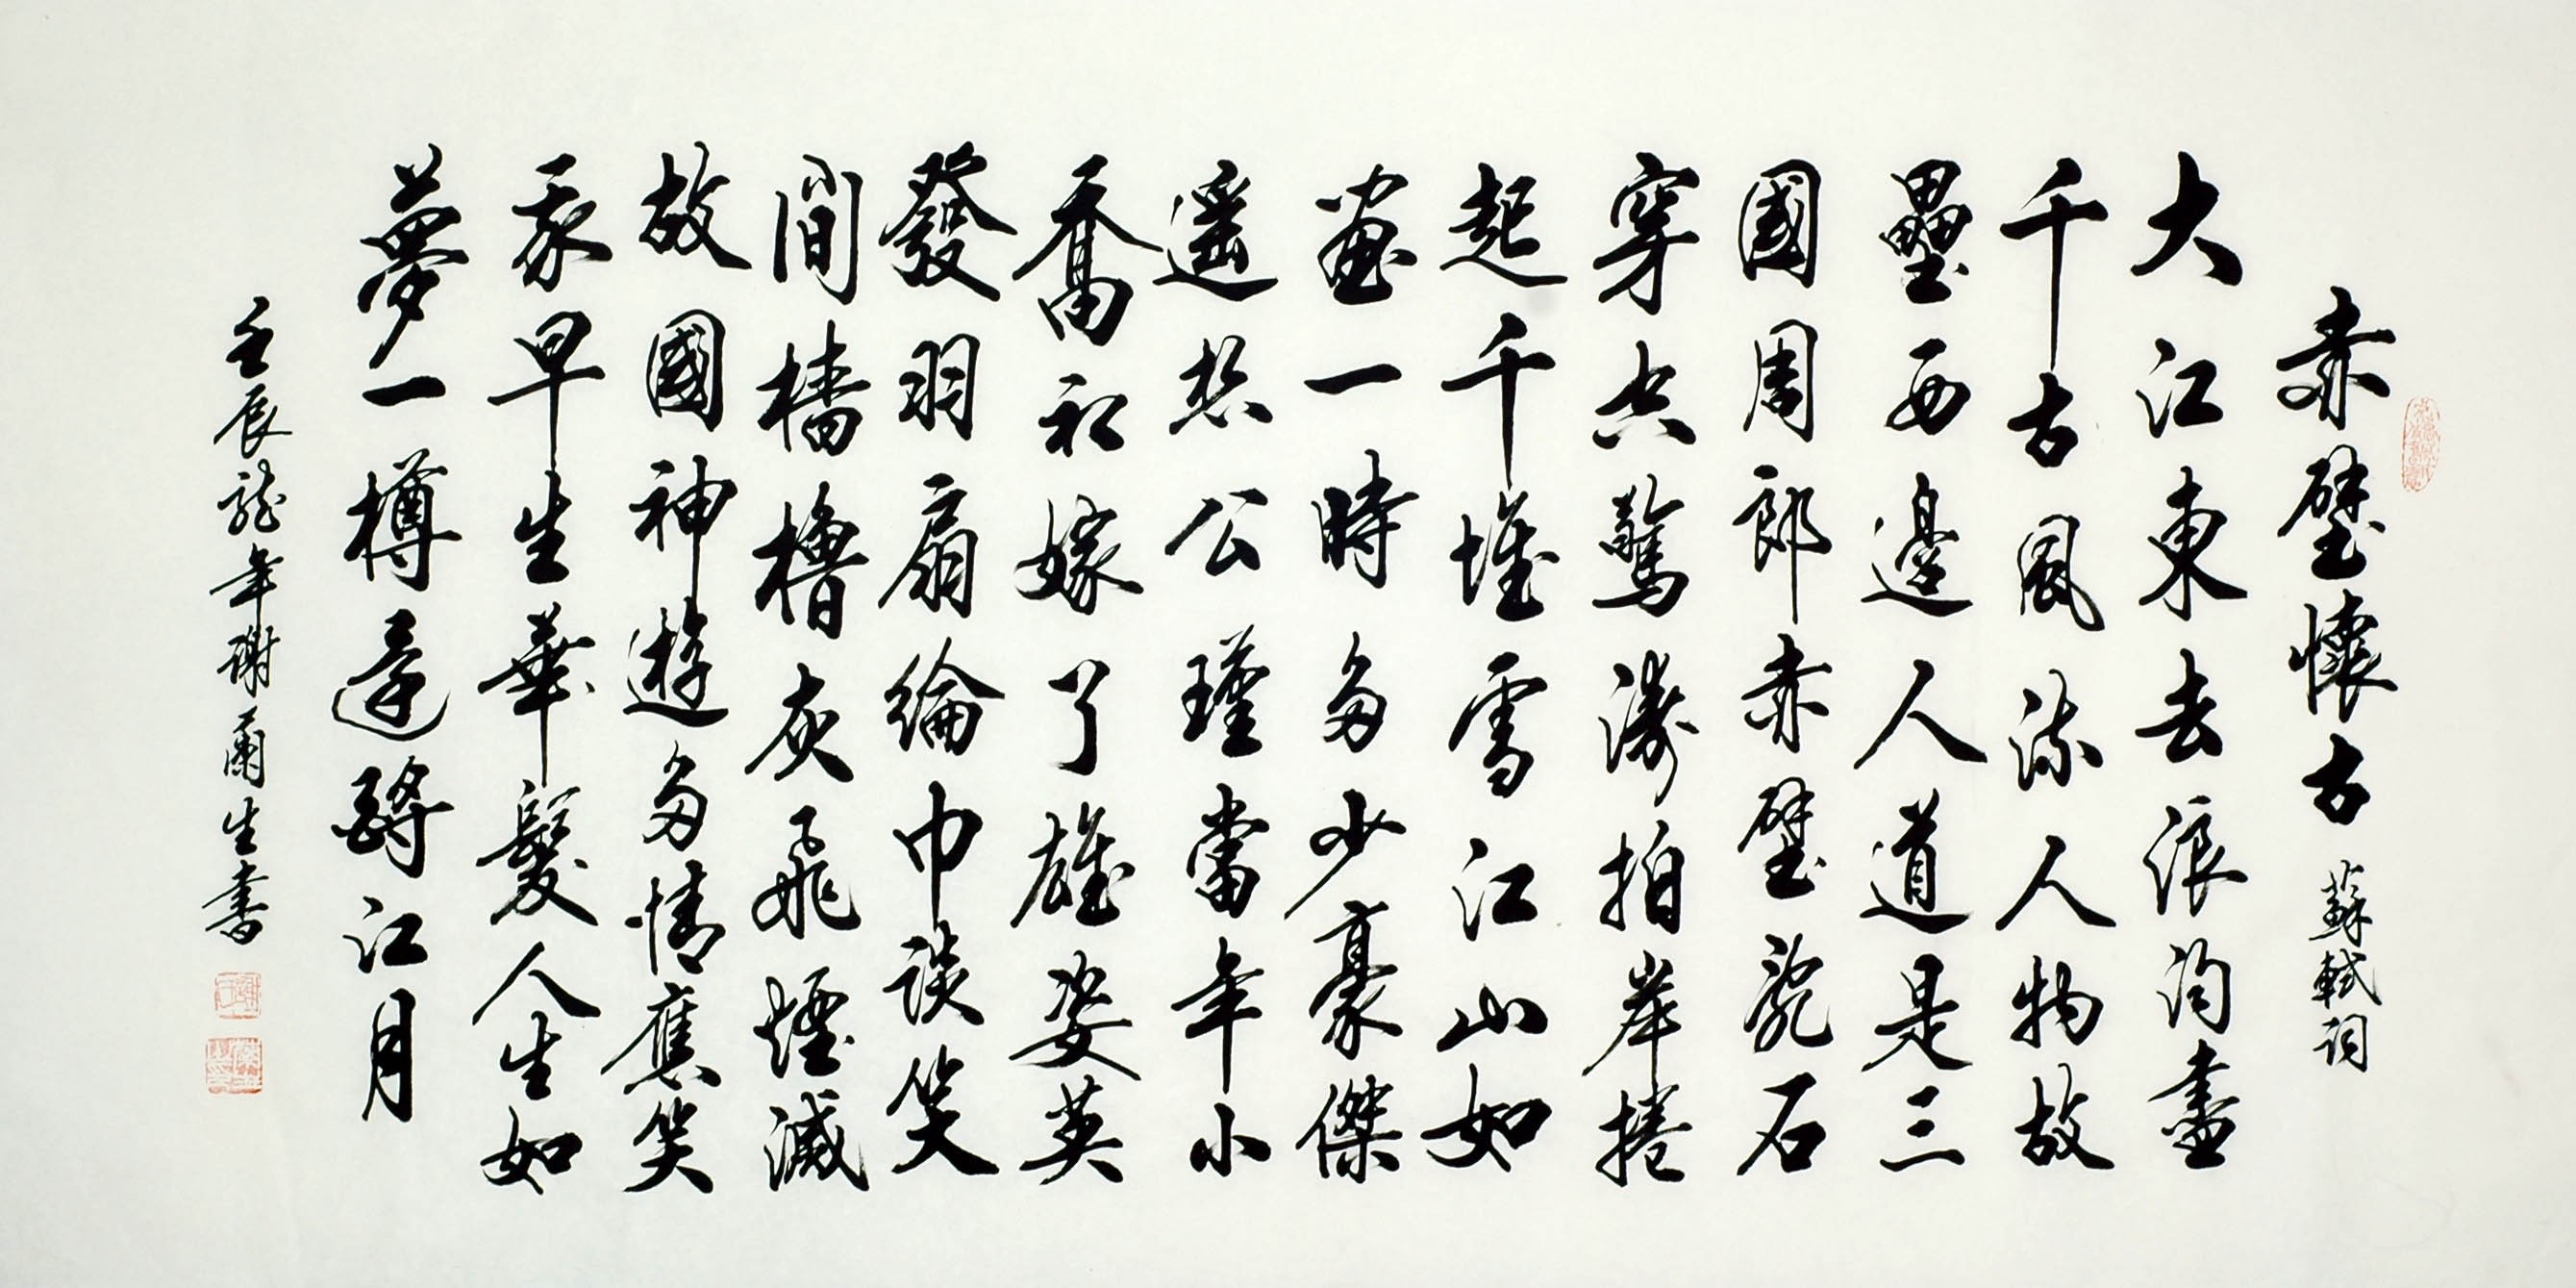 Chinese Cursive Scripts Painting - CNAG010156